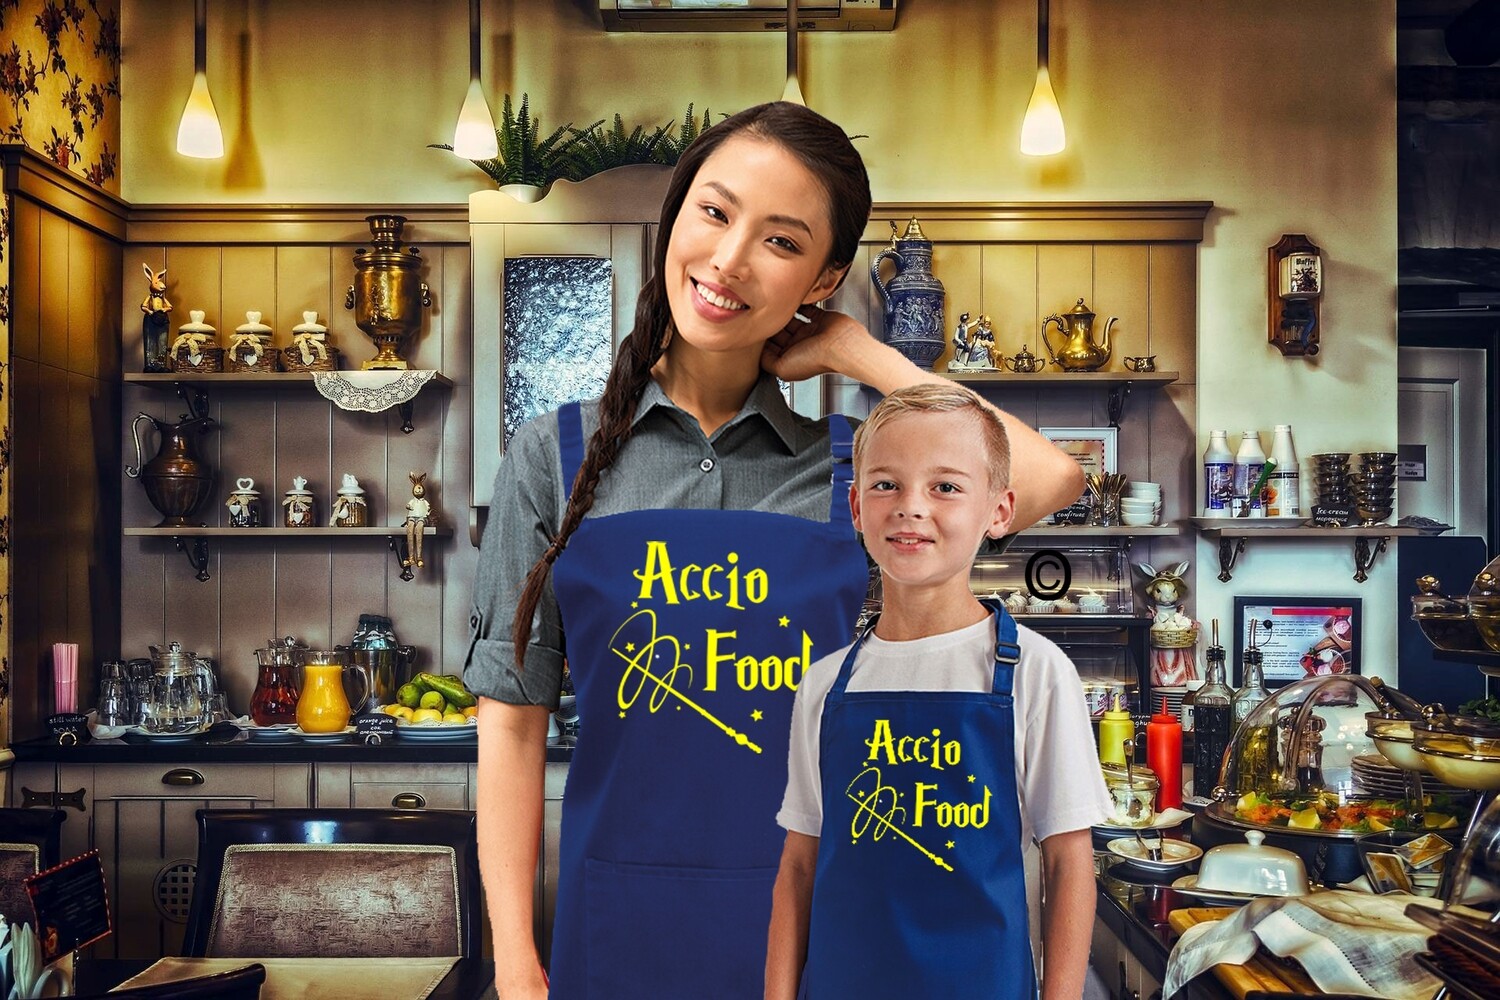 Accio Food Adult &amp; Child Set Wizards Apron.